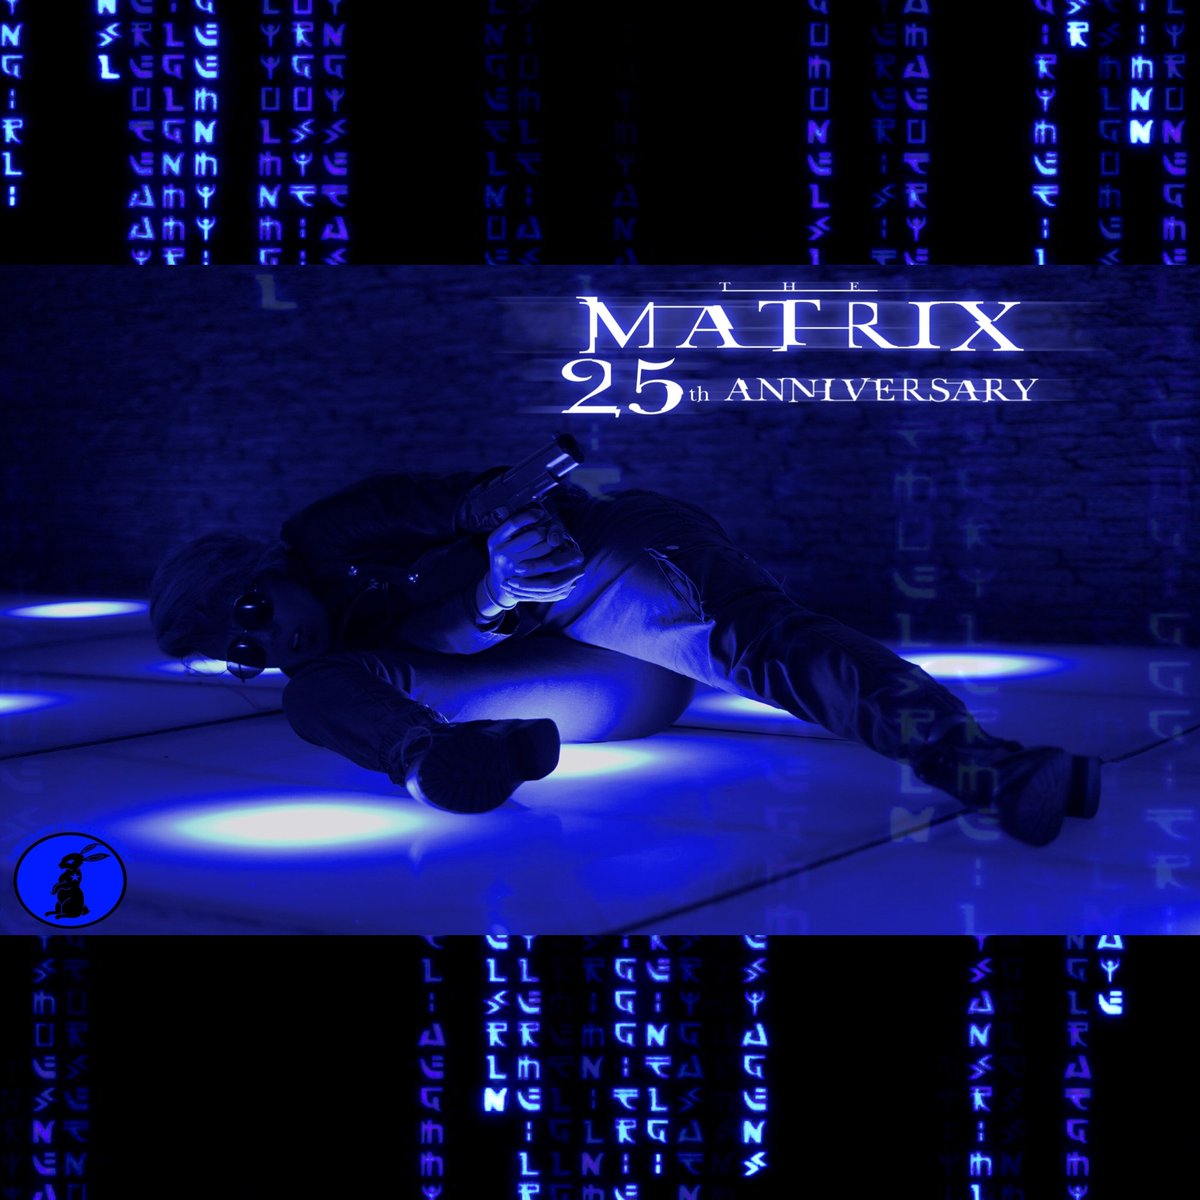 'We should go.'
-Bugs

agentsyndicate.online

#Matrix #ProjectMatriculated #Reloaded #MatrixResurrections #MatrixMonday #Bugs #Cosplay #CosplayMonday #Cosplayers #Munday #TheMatrix #MatrixCosplay #MatrixMondays #NeoOlogist #MatrixUniversity